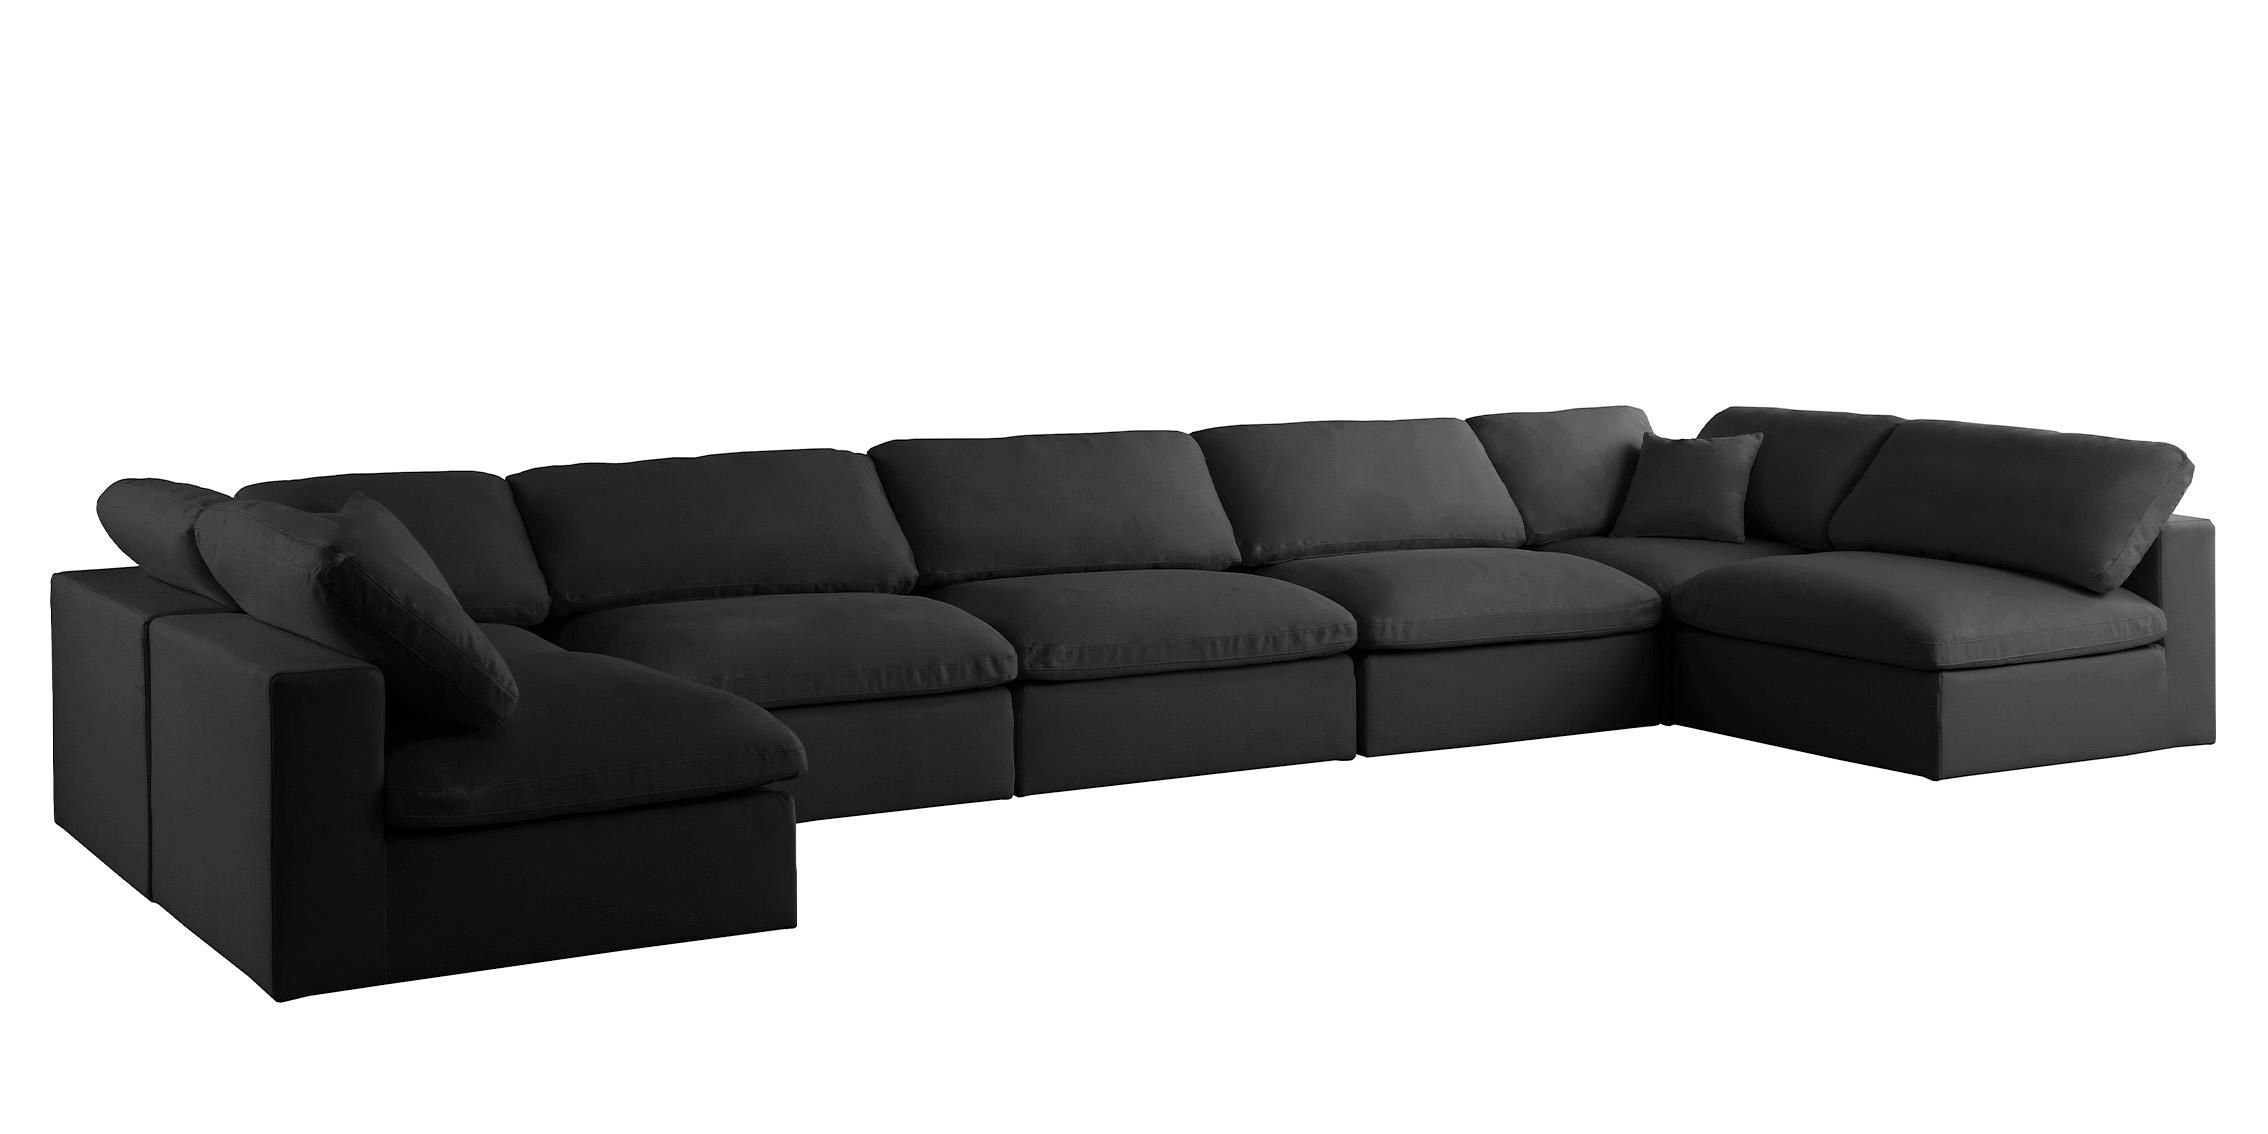 Contemporary, Modern Modular Sectional Sofa 602Black-Sec7B 602Black-Sec7B in Black Fabric